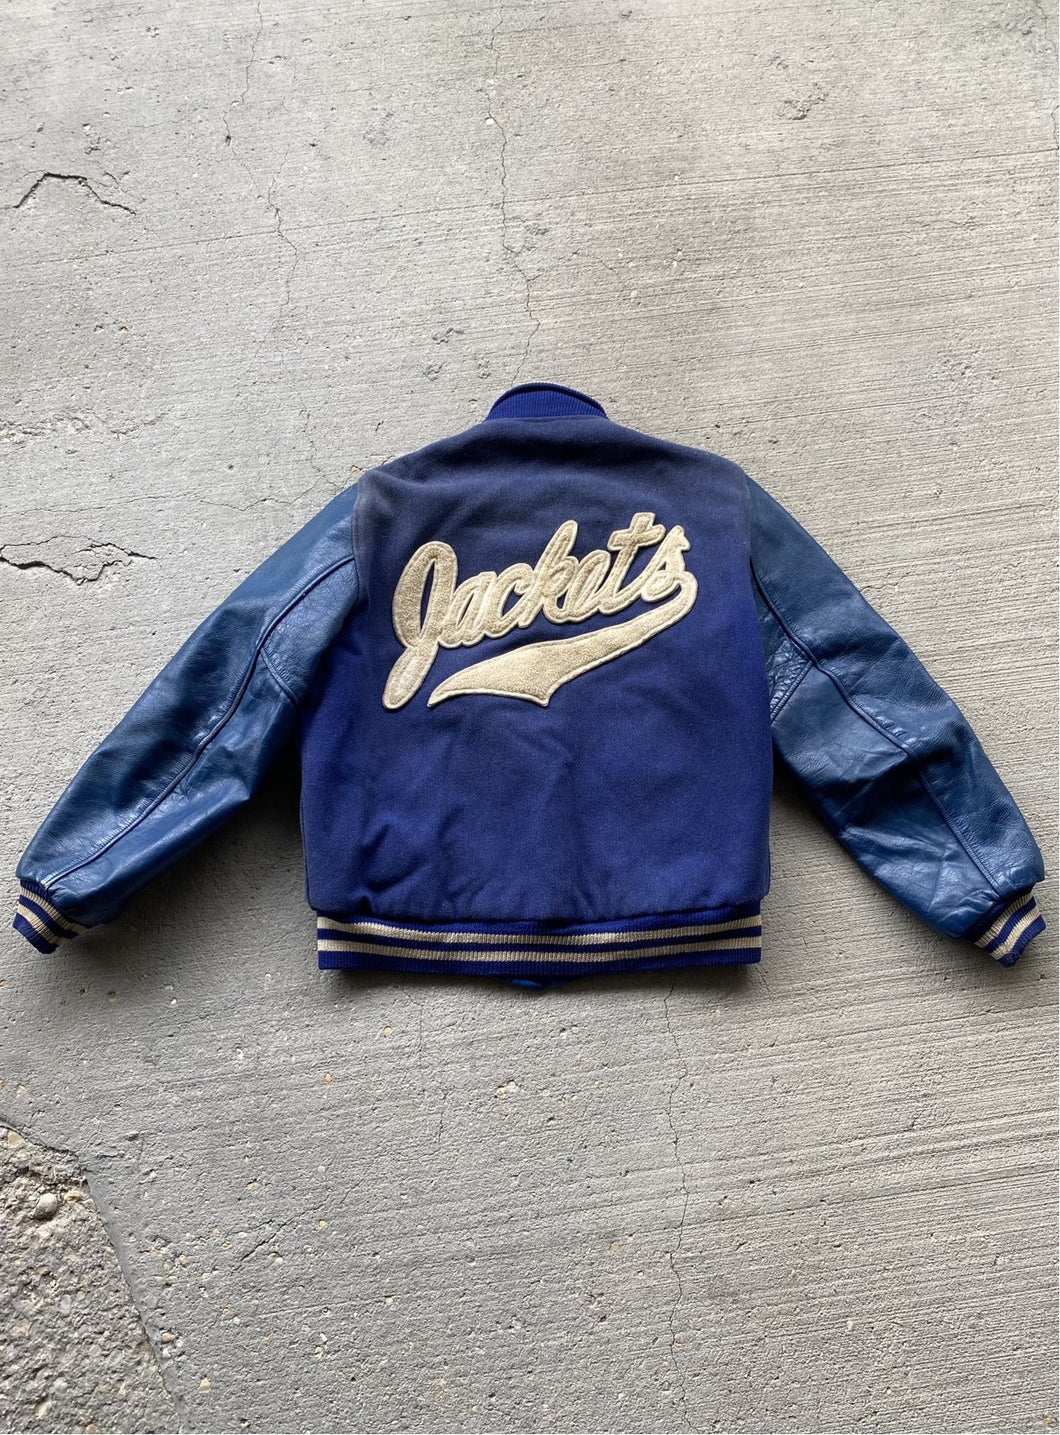 Blue “jackets” varsity jacket